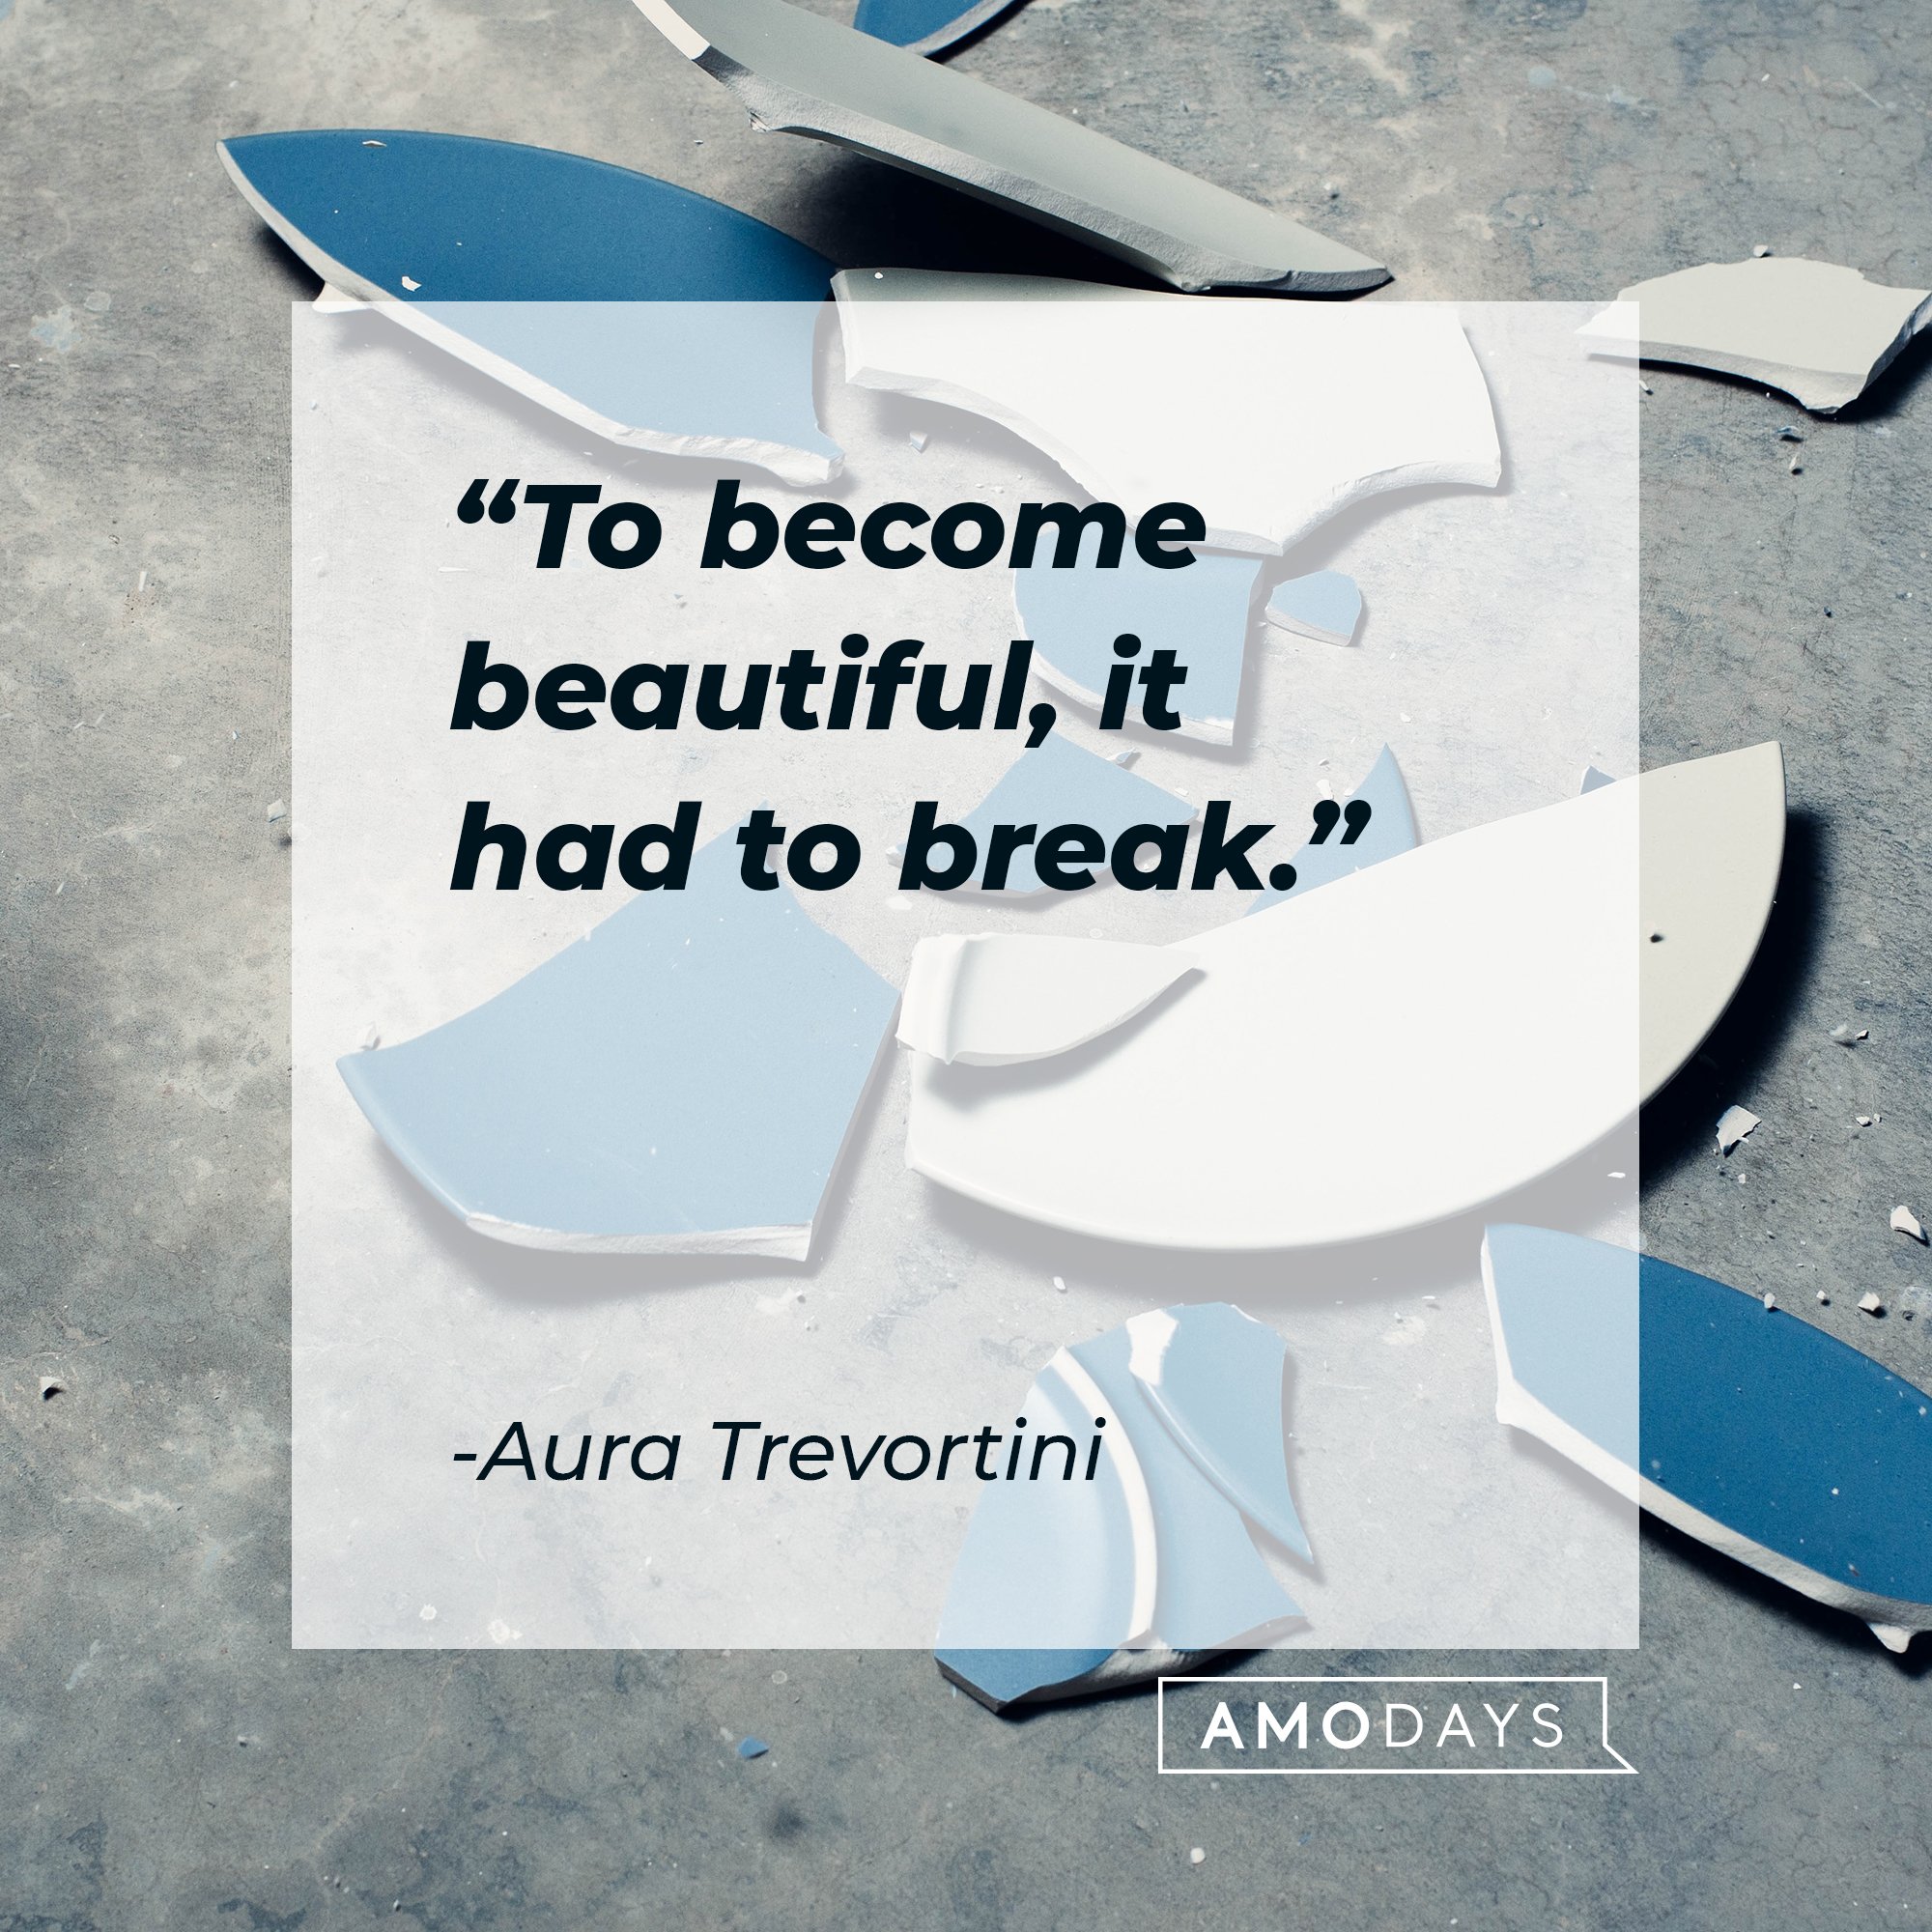 Aura Trevortini’s quote: "To become beautiful, it had to break." | Image: AmoDays